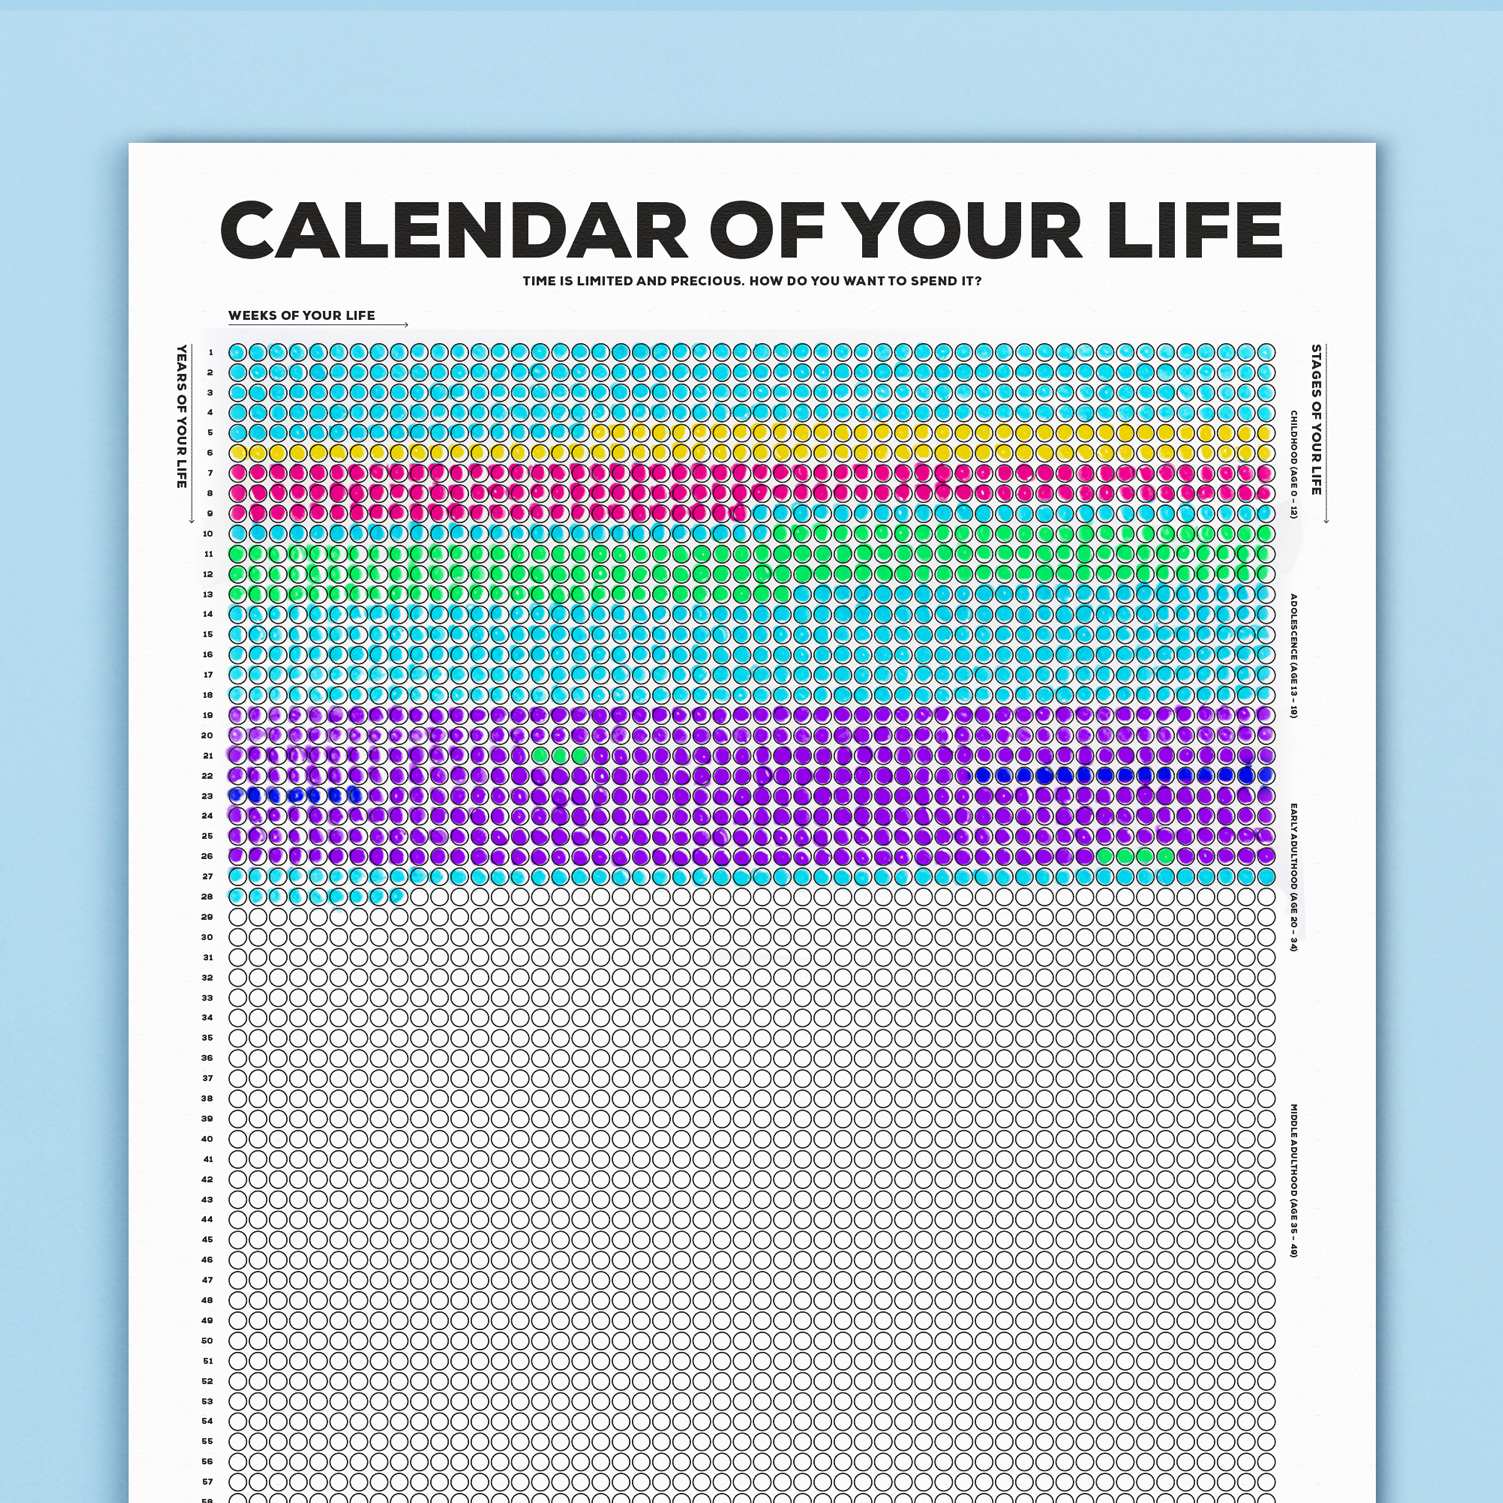 Calendar of Your Life Infographic Poster (B&W) the kurzgesagt shop